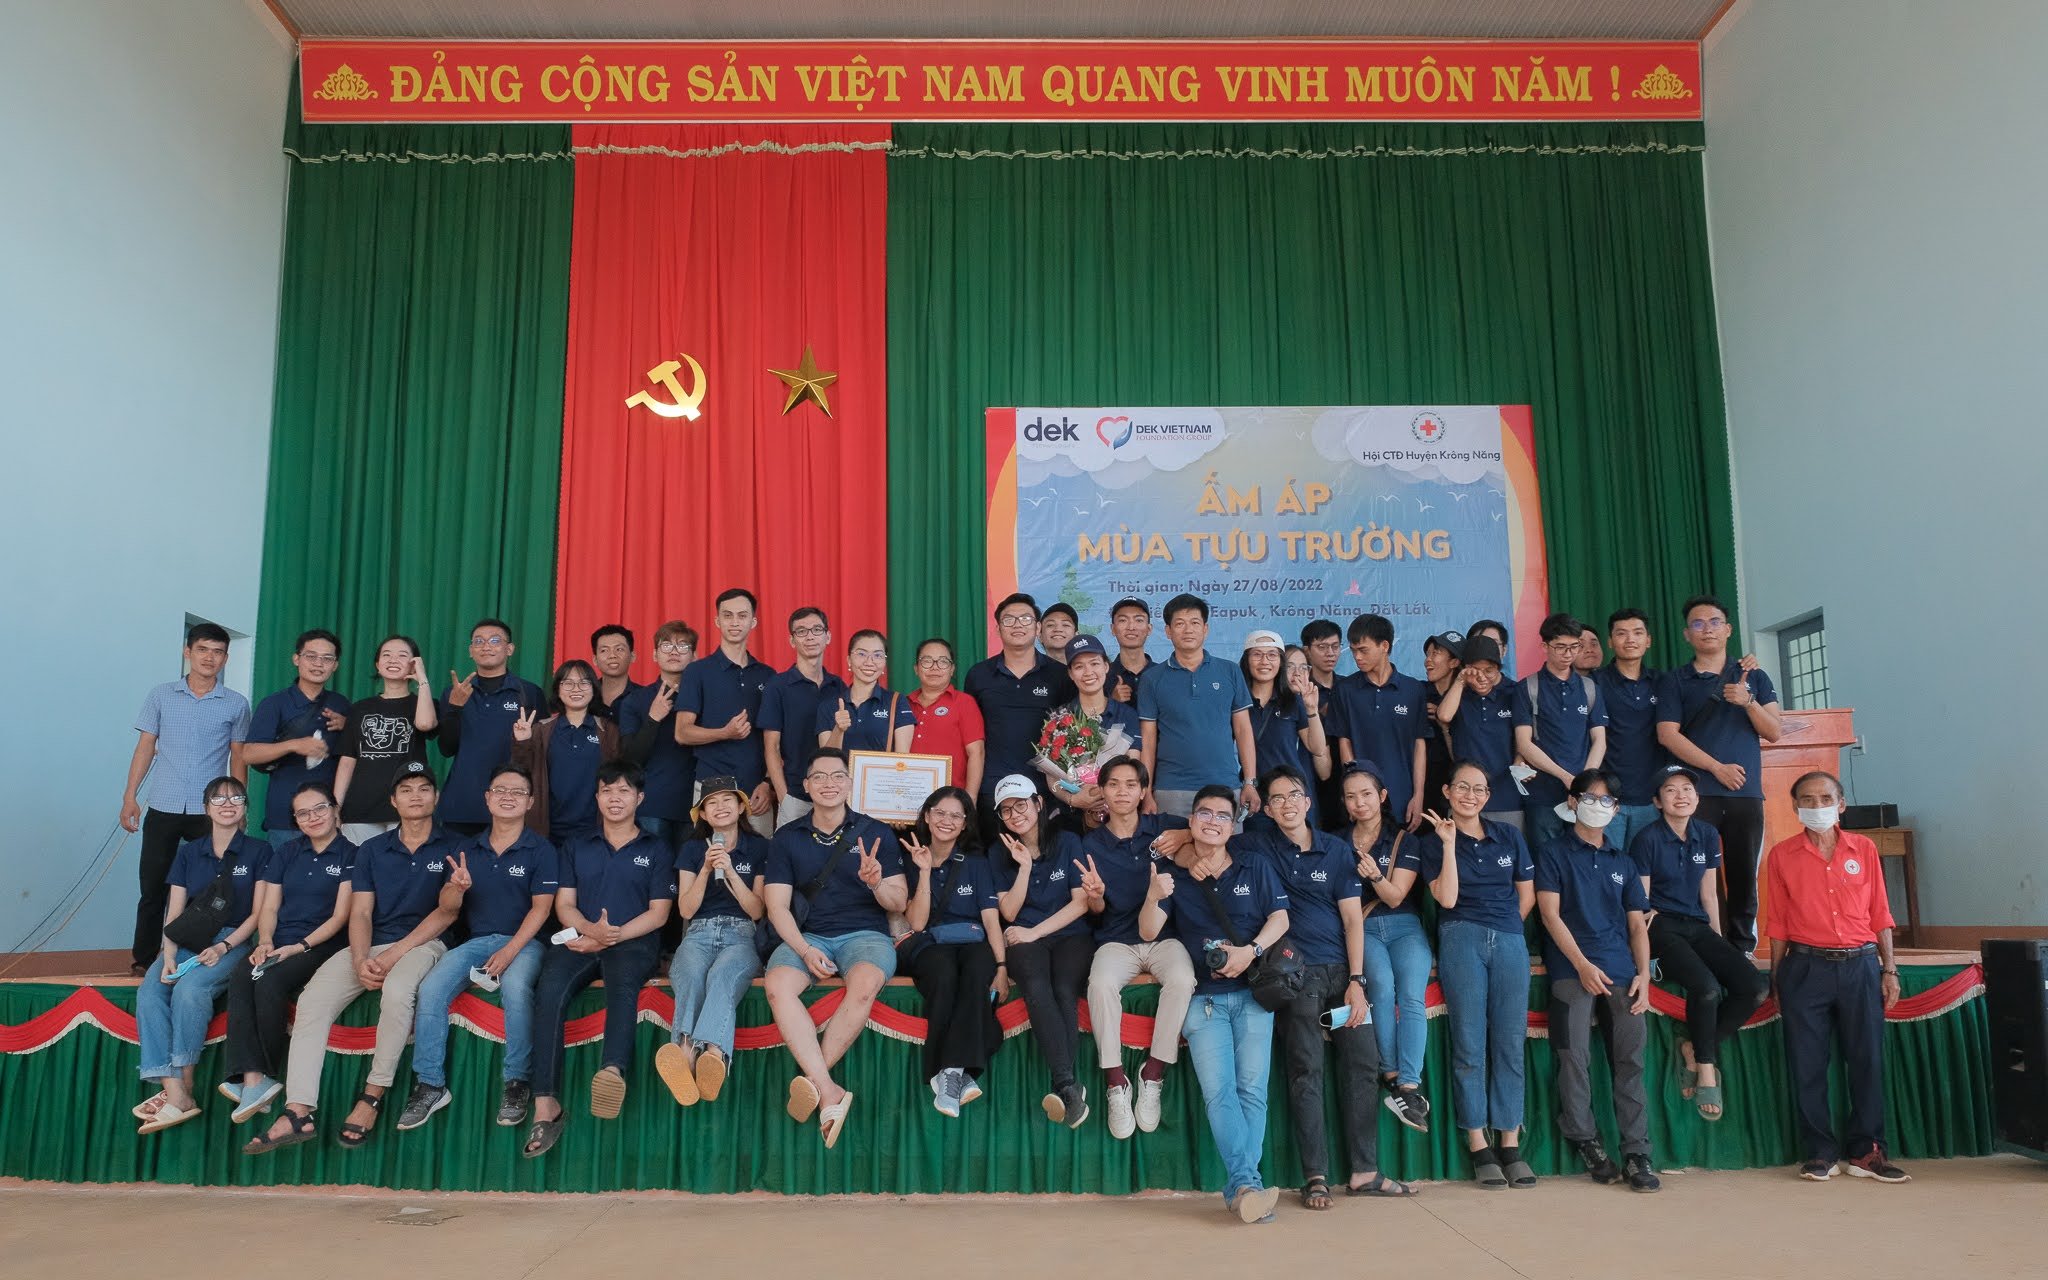 dek technologies vietnam people